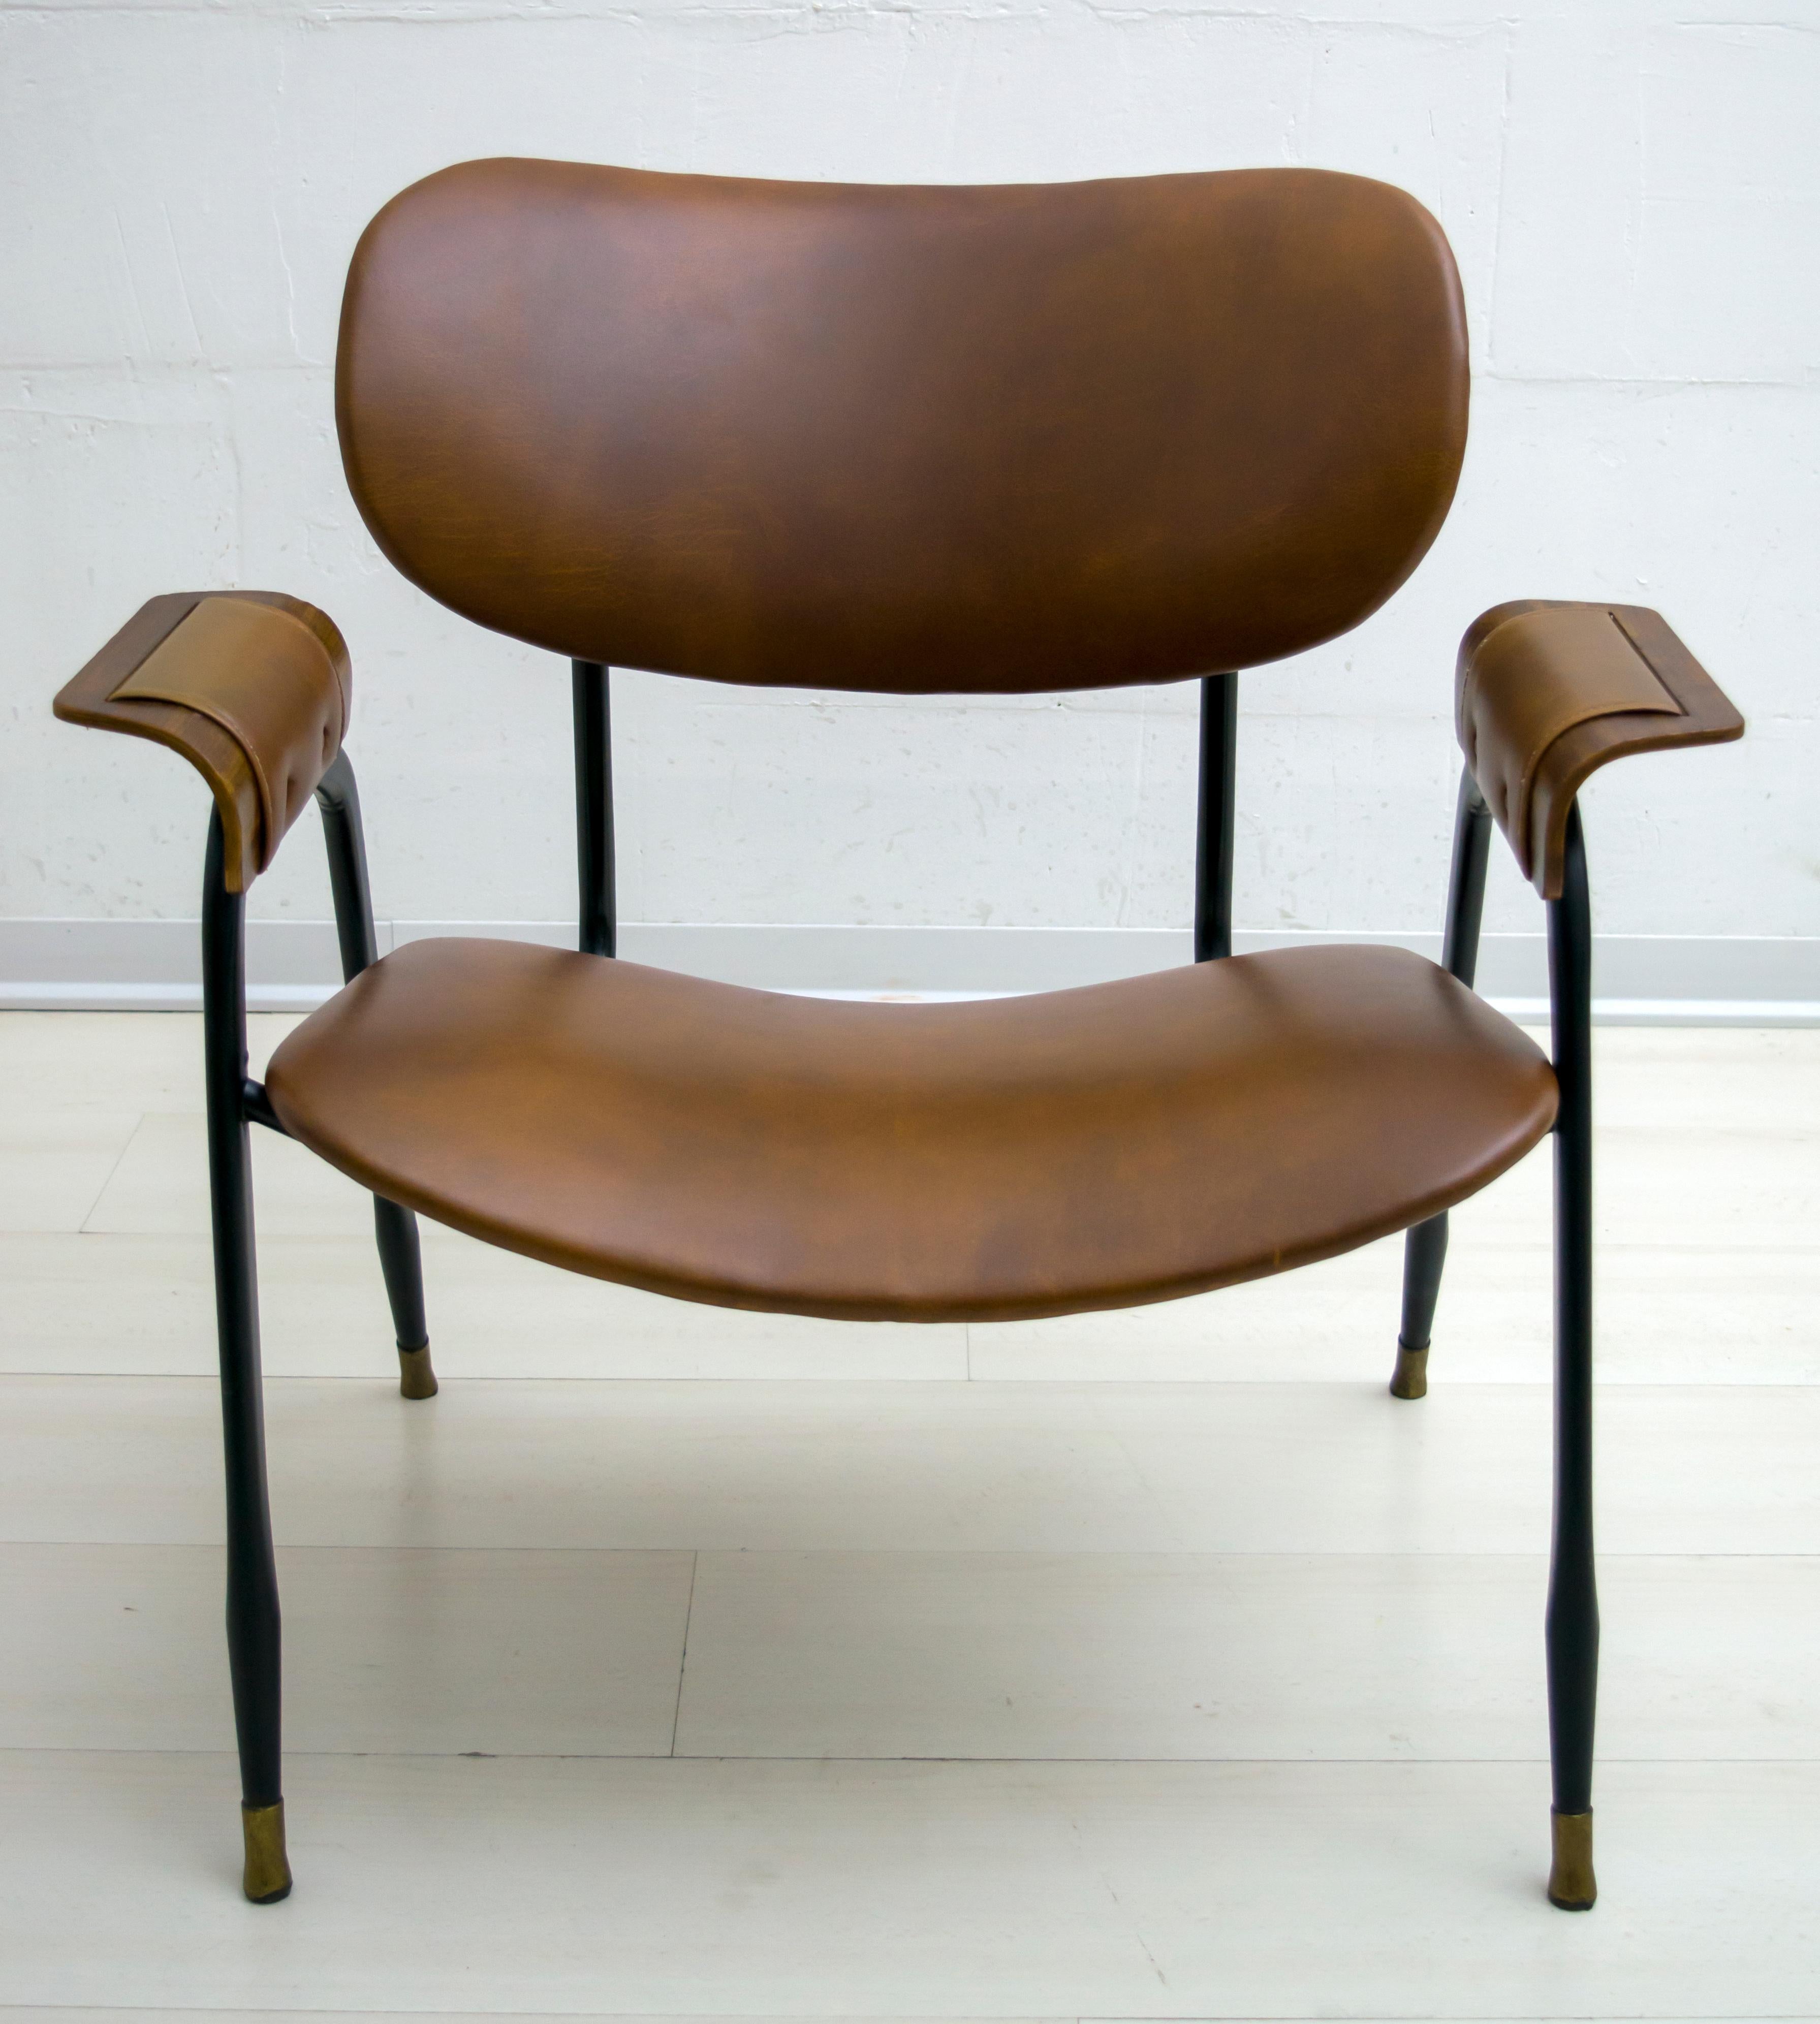 Lacquered Gastone Rinaldi Mid-Century Modern Italian Leather Armchair for RIMA, 1960s